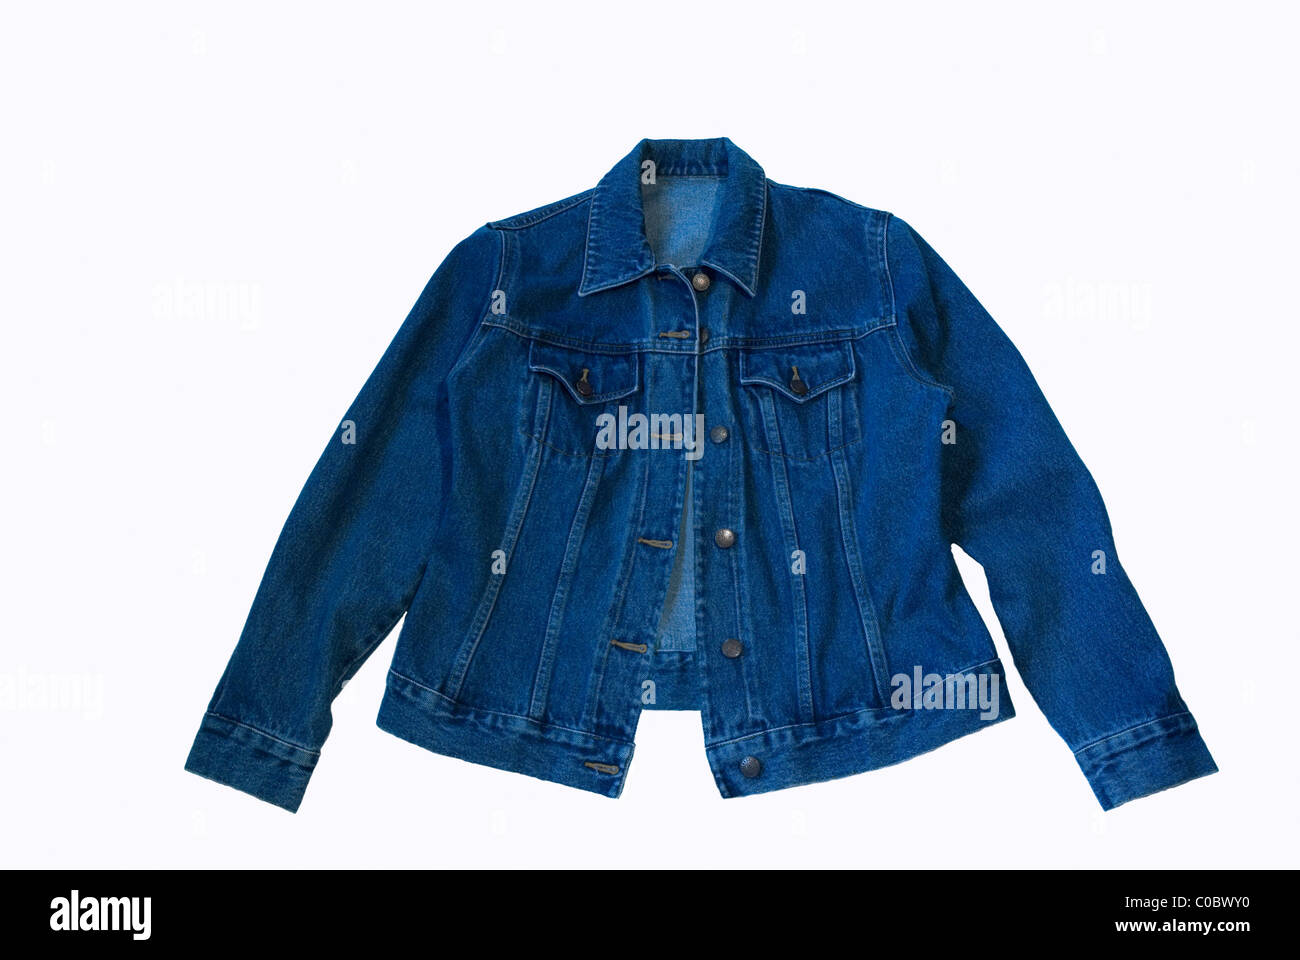 Blue jean jacket on white background Stock Photo - Alamy